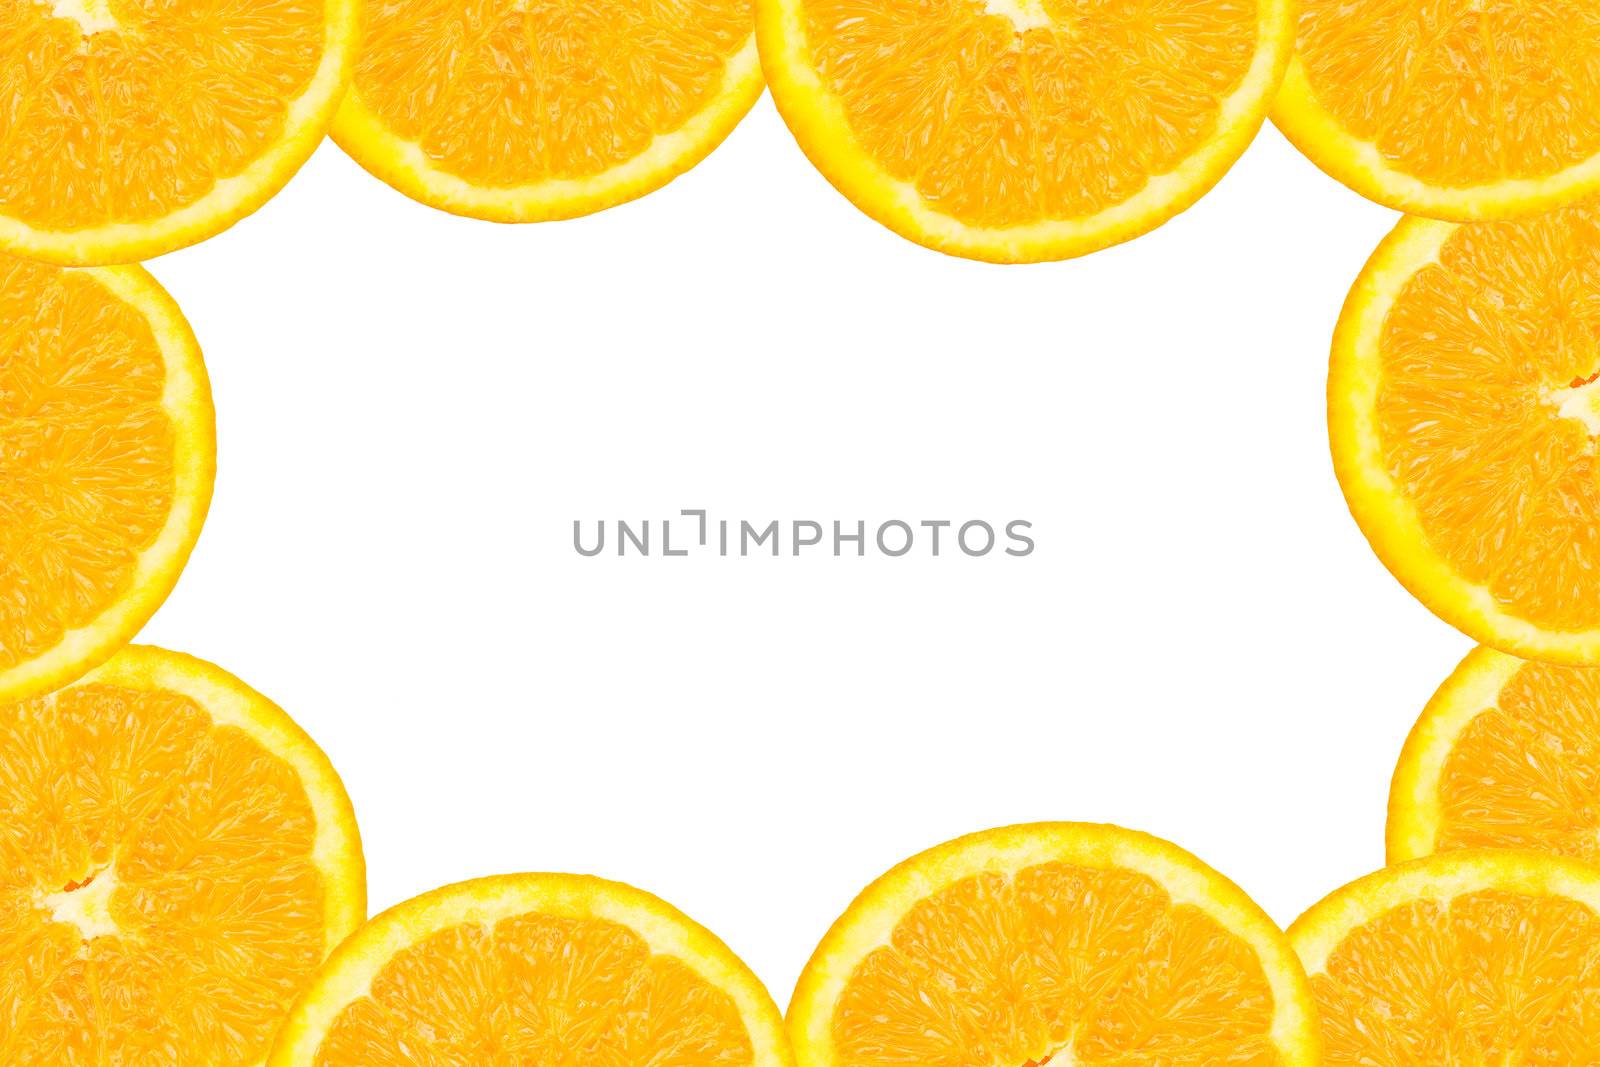 An orange frame on the white background